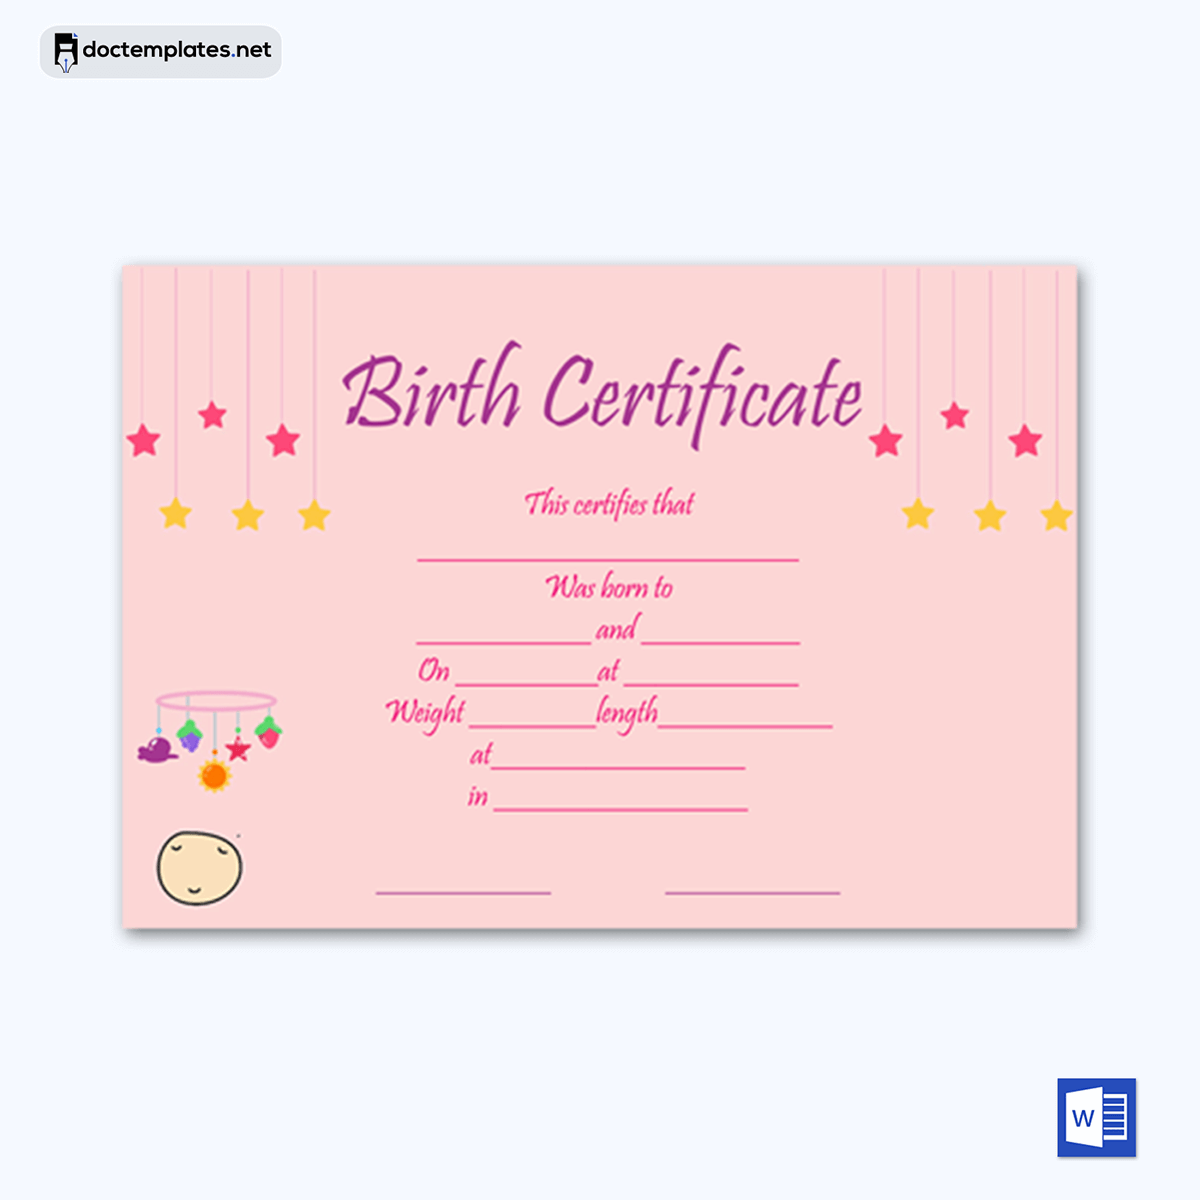 Image of Hospital birth certificate format PDF
Hospital birth certificate format PDF
06